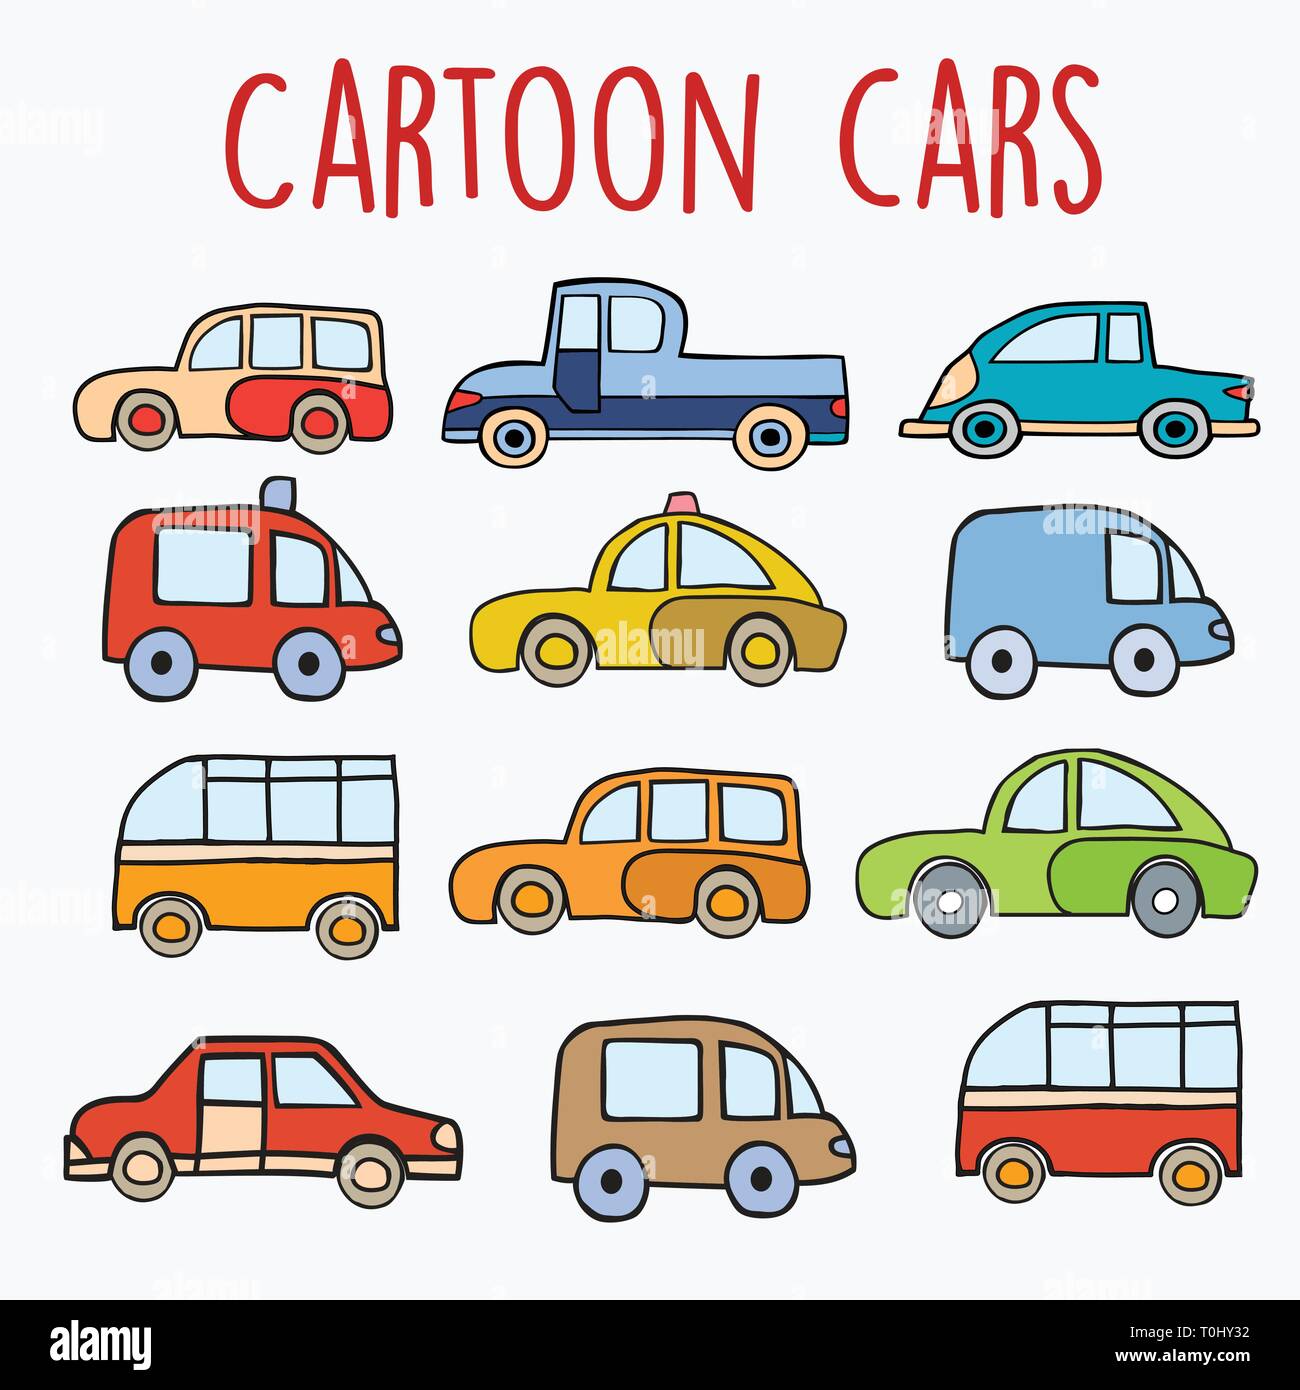 Cartoon cars sketch Stock Vector